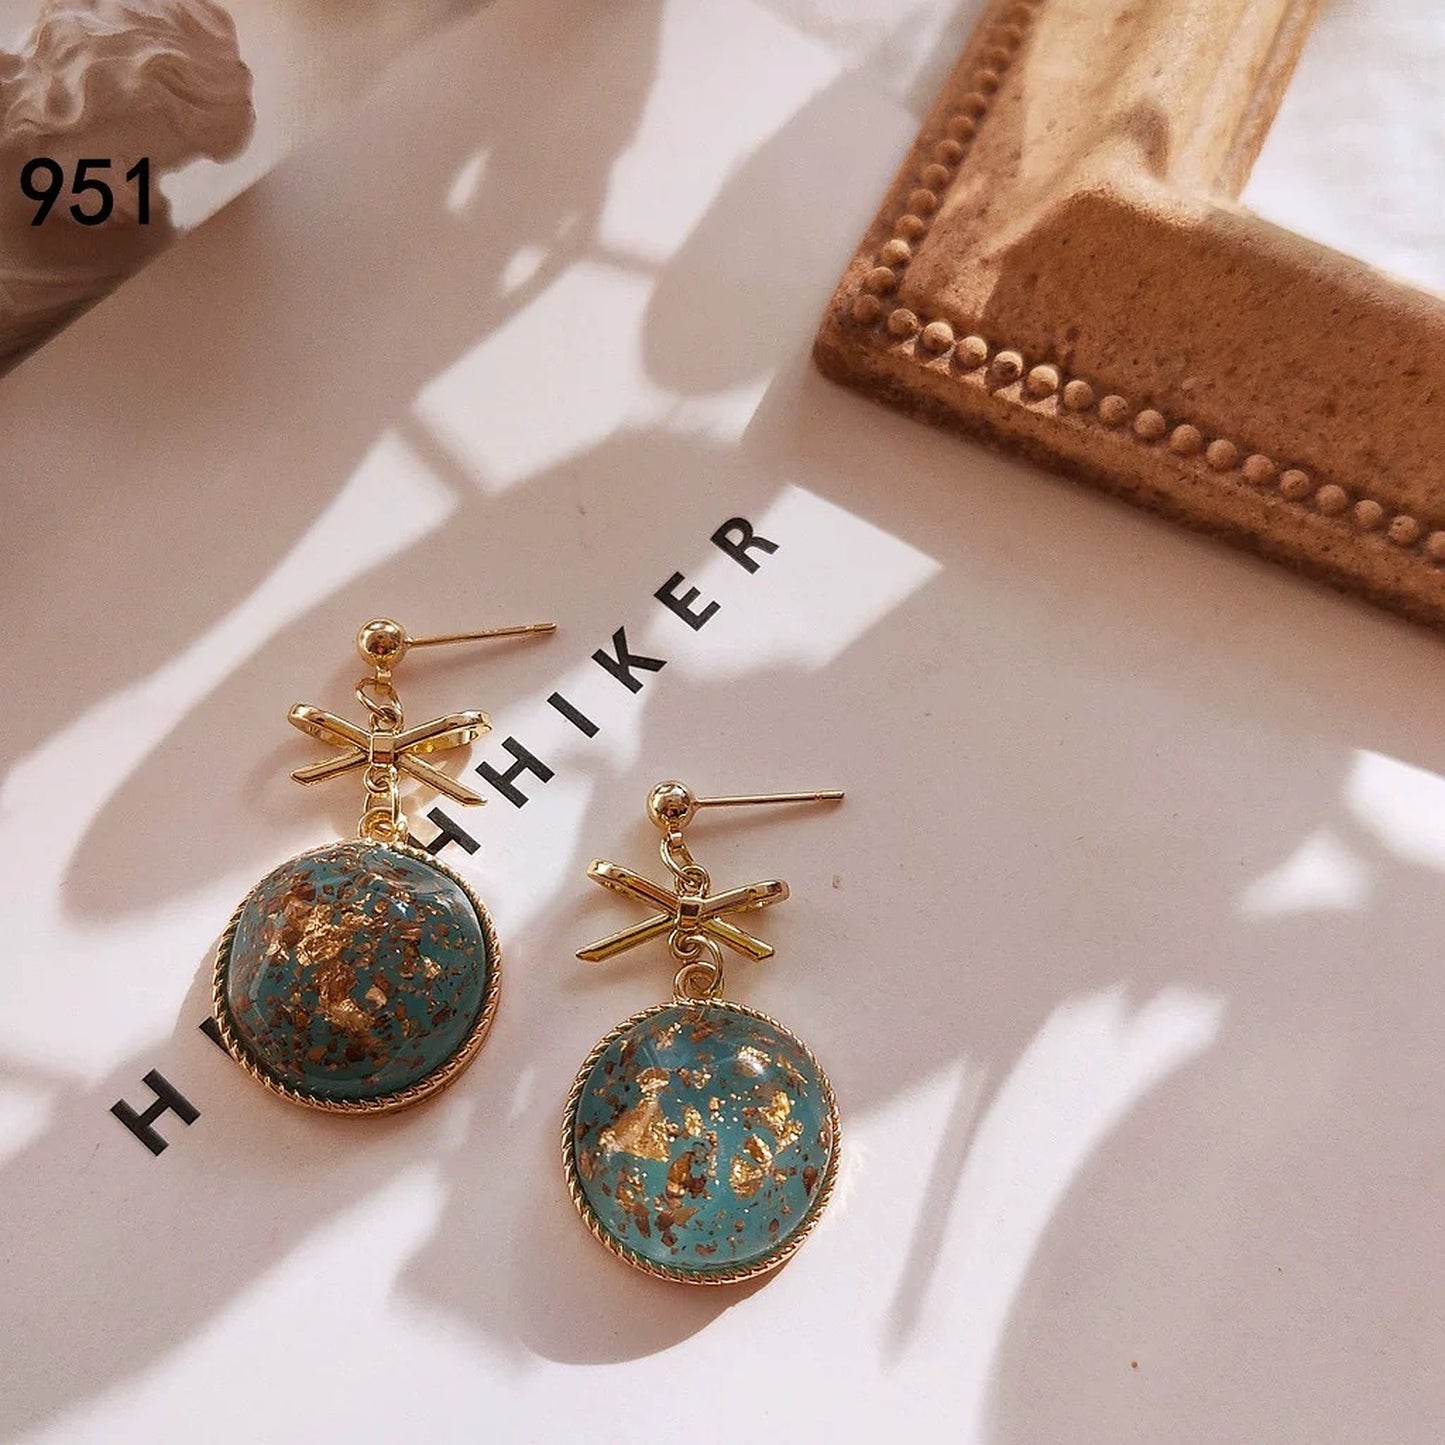 Dried pressed botanical resin earrings, Gold foil leaf jewelry, Round dome earrings, Blue flower earrings, Green vintage statement earrings